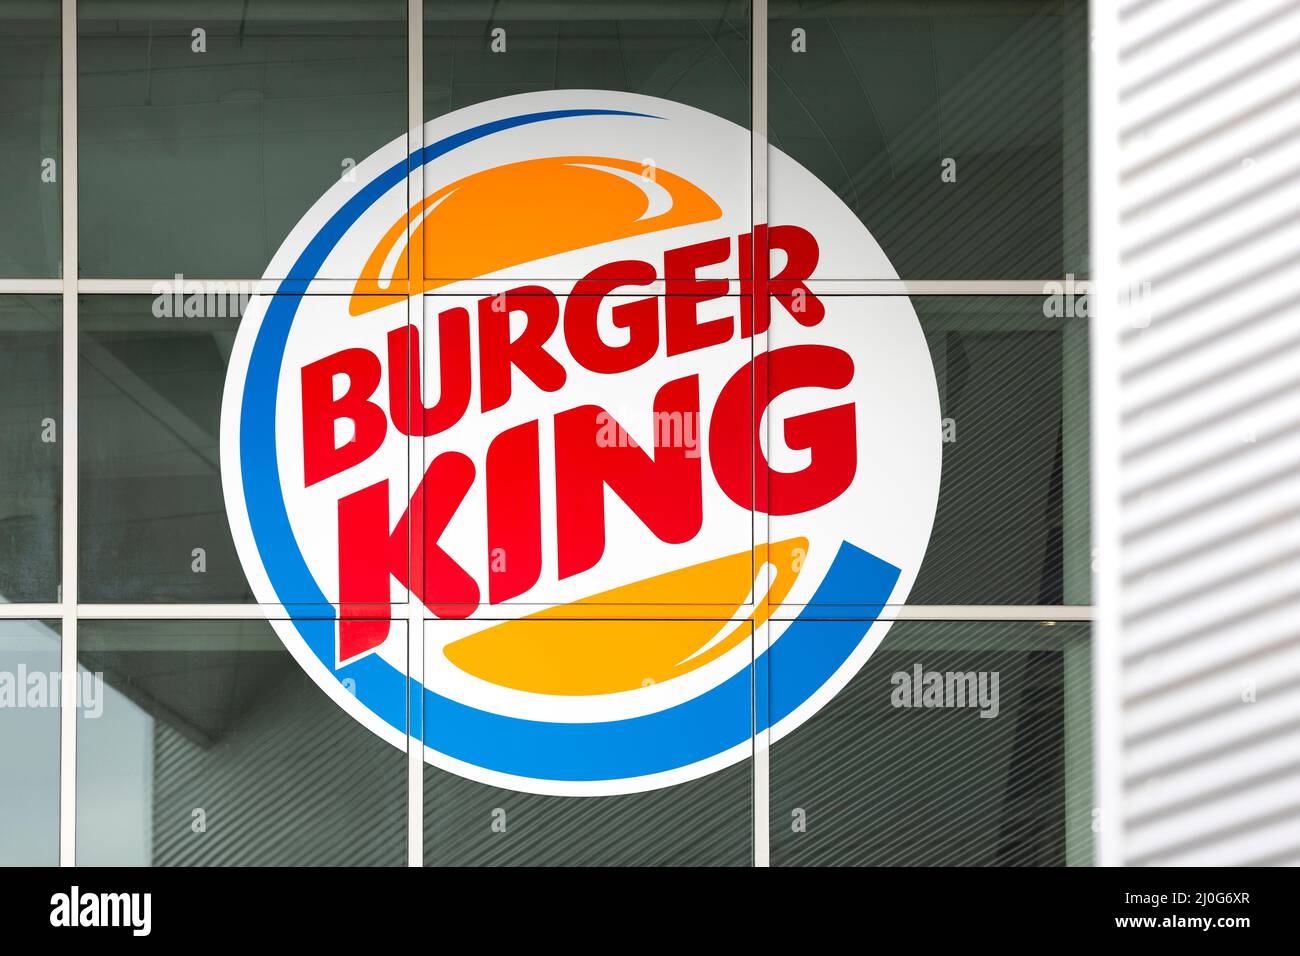 MADRID, SPANIEN - 13. FEBRUAR 2022: Modernes Logo der berühmten amerikanischen Fast-Food-Hamburger-Restaurantkette Burger King. Stockfoto